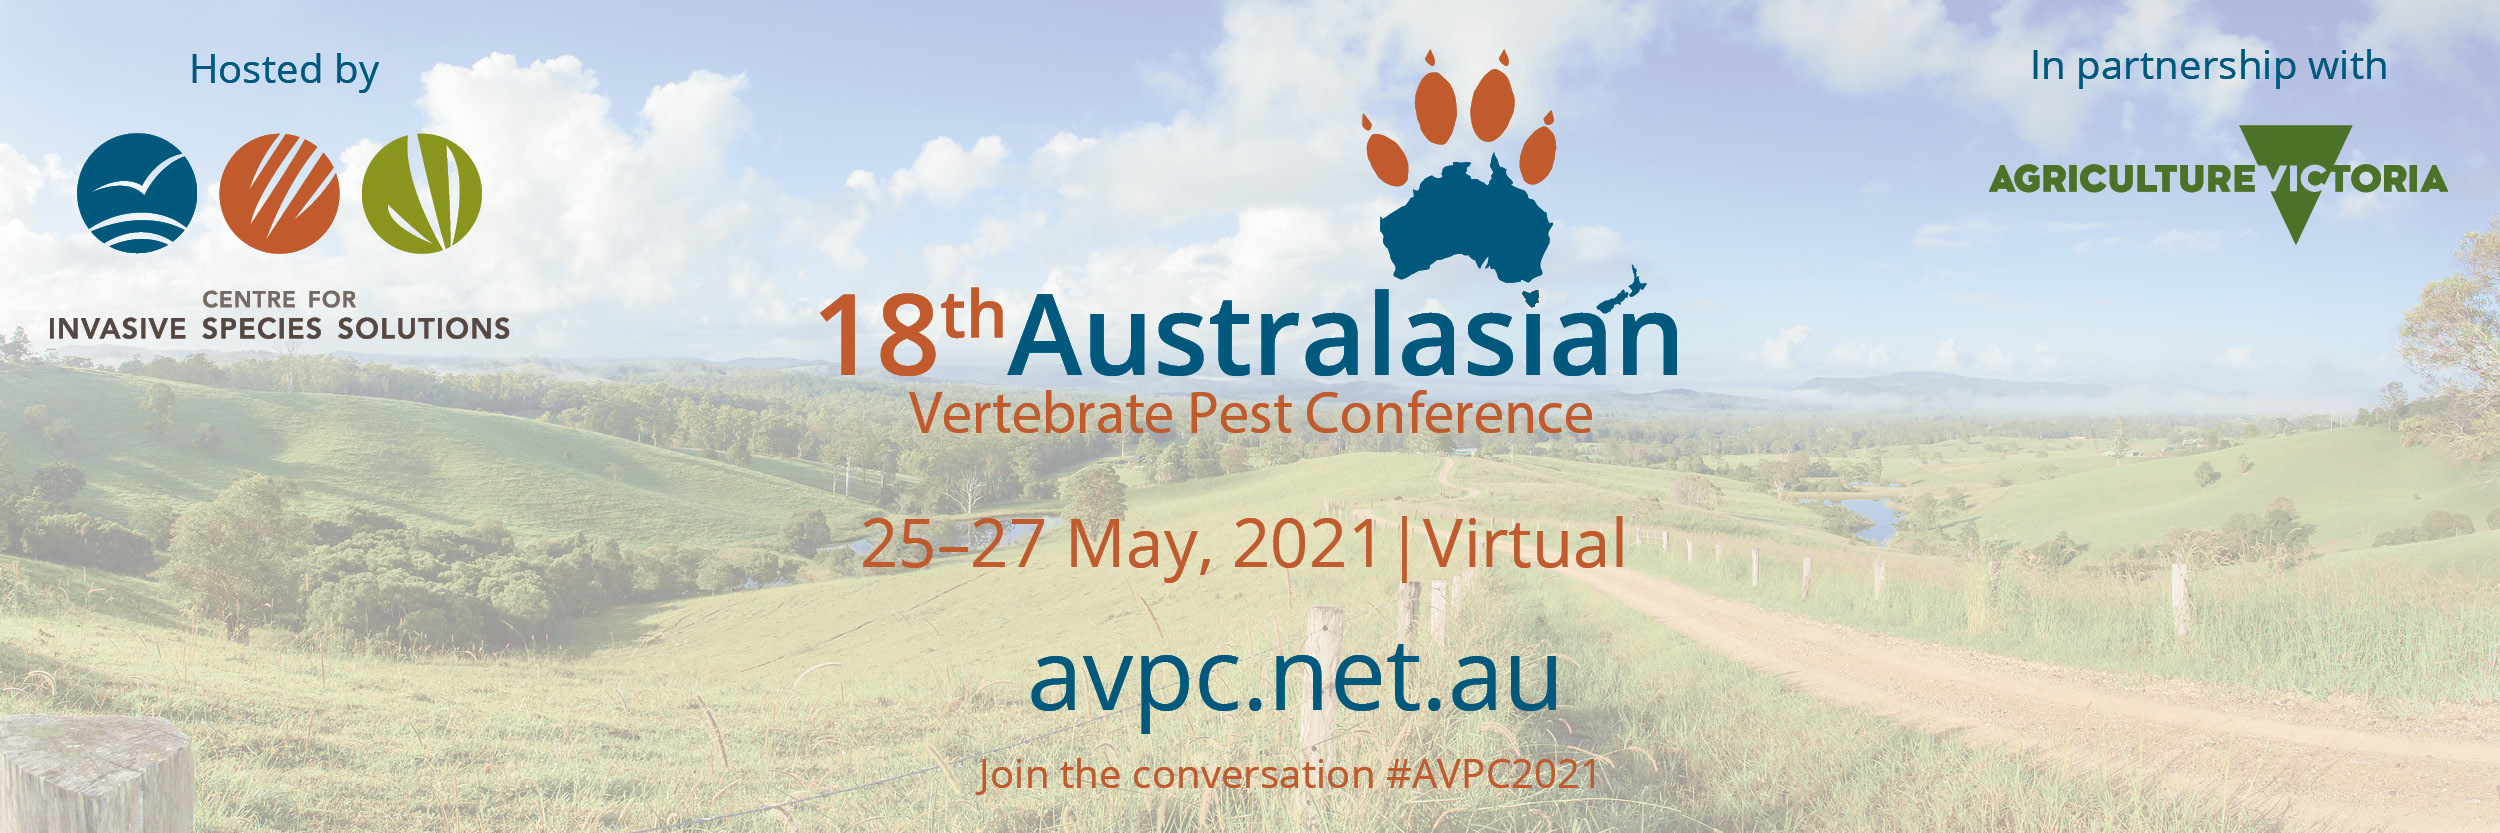 NRMjobs - 20007885 - 18th Australasian Vertebrate Pest Conference